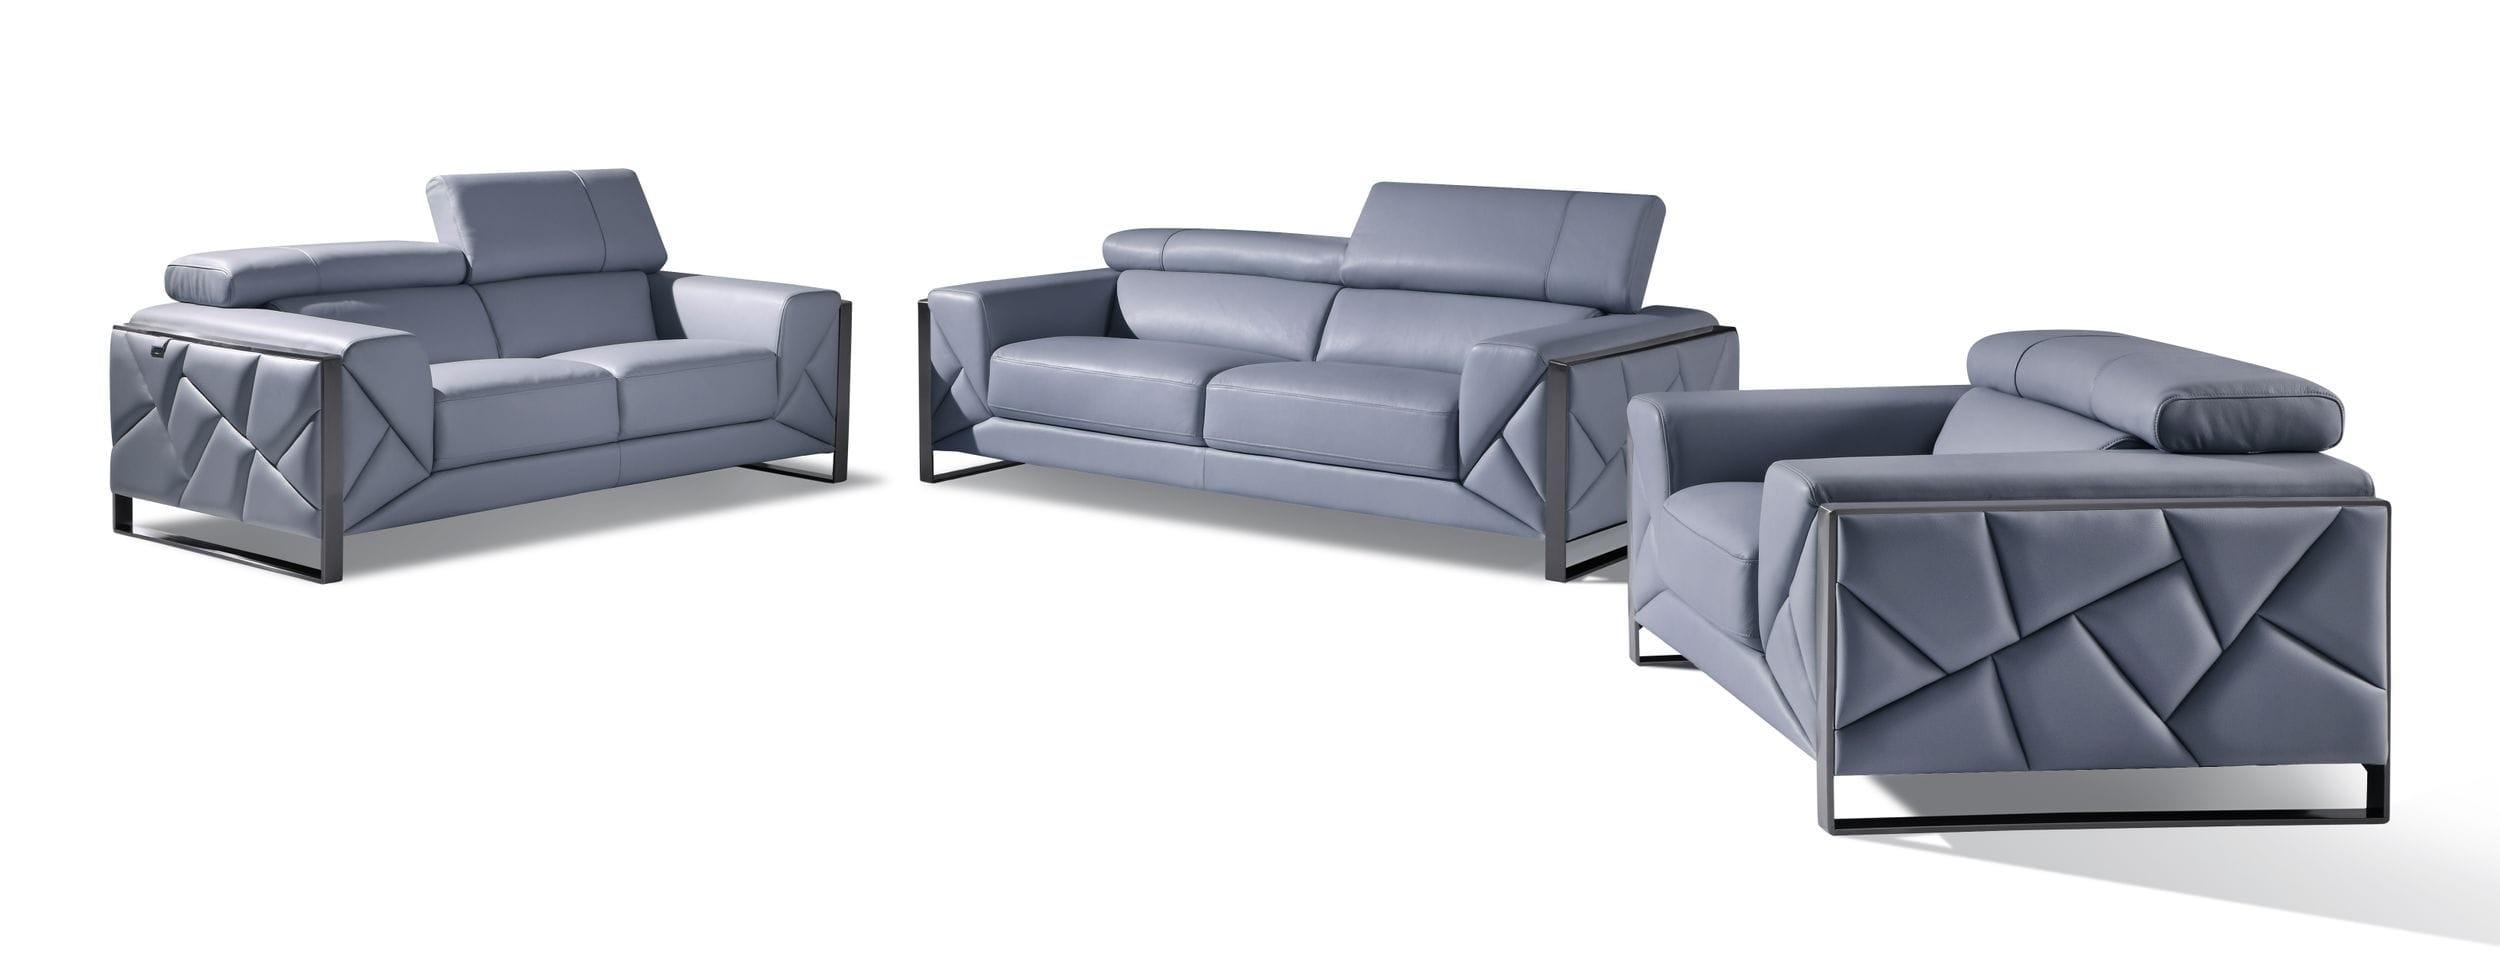 Contemporary Sofa Loveseat and Chair Set 903 903-LIGHT_BLUE-3-PC in Light Blue Genuine Italian Leatder